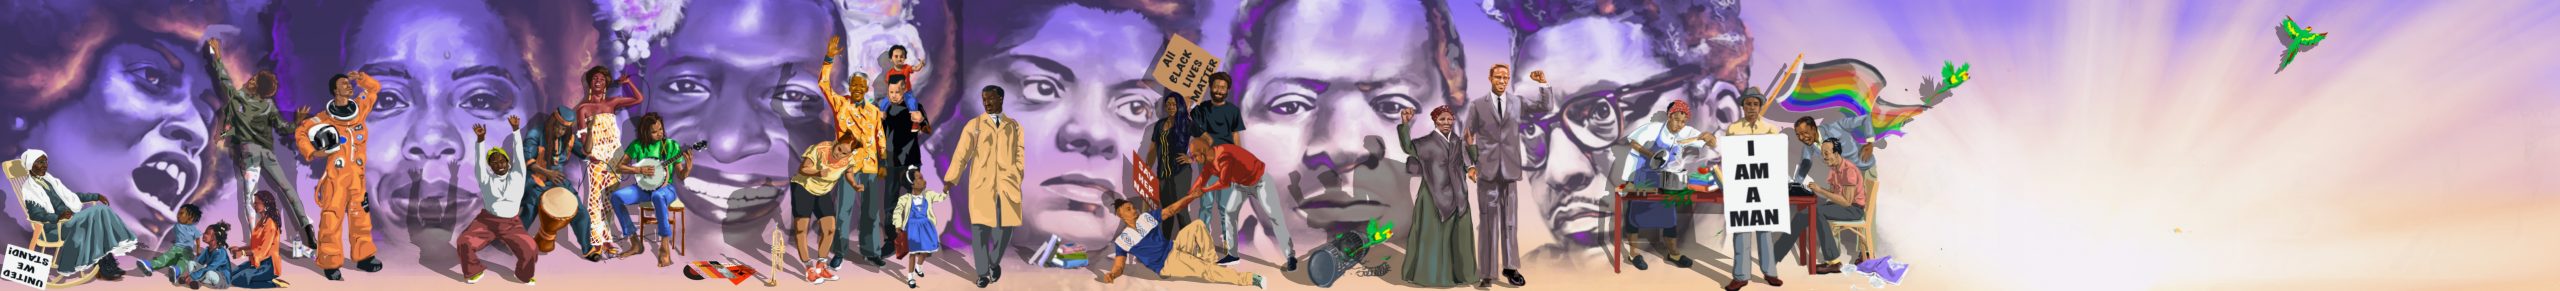 Thumbnail for Anti-Bias Club finalizes design for Black Lives Matter mural